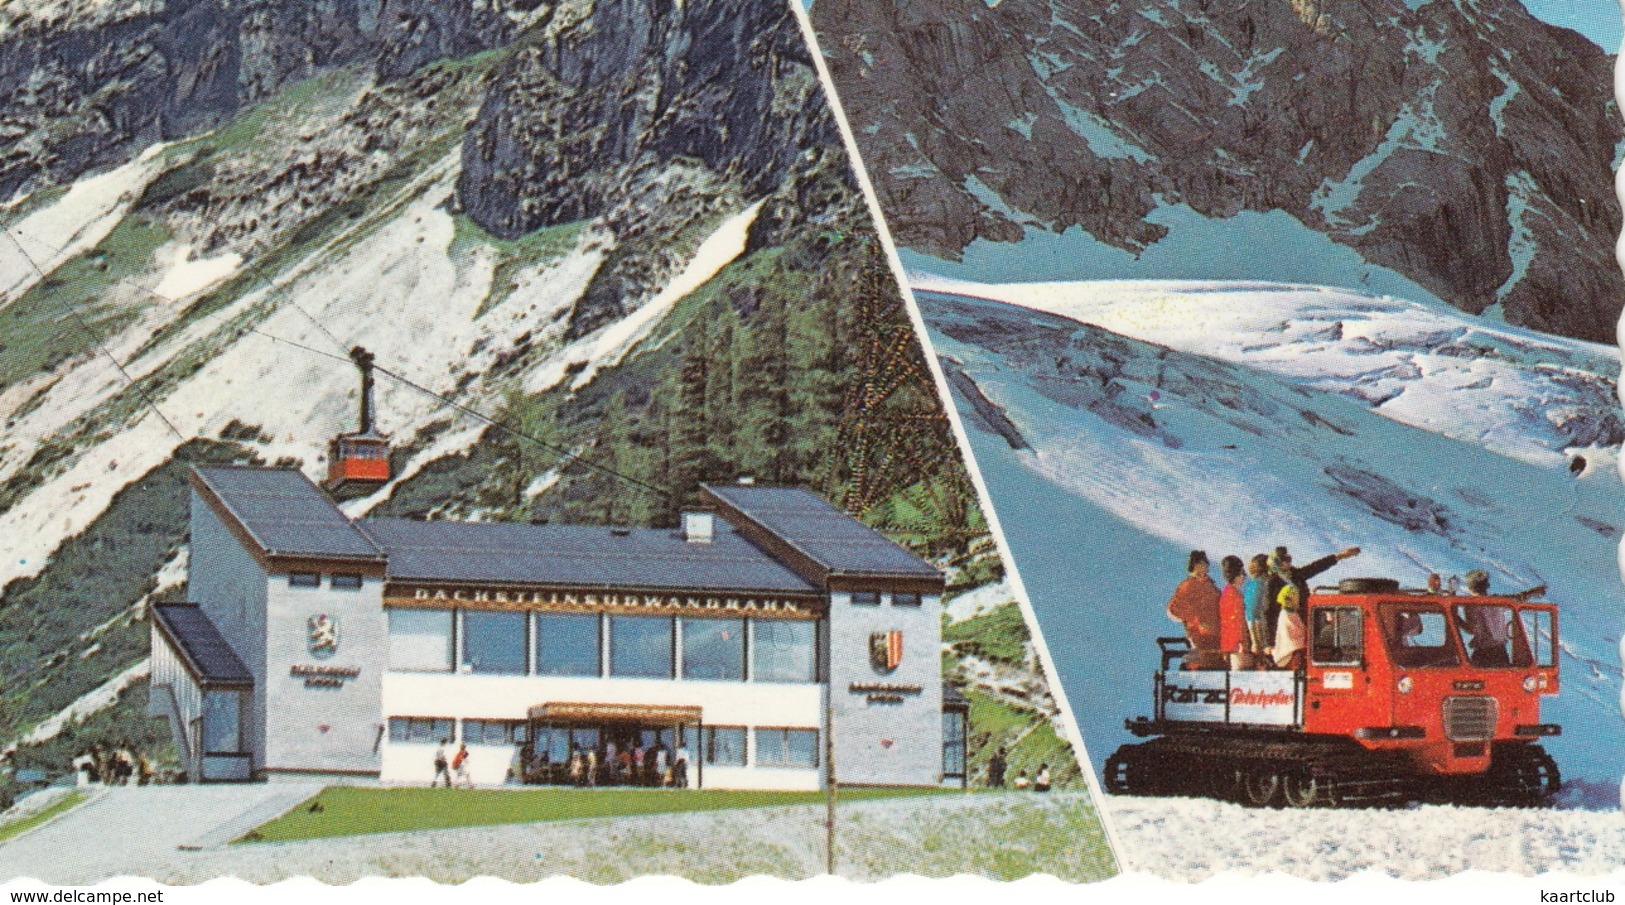 Ramsau:  THIOKOL SNOWCAT, Gletscherbahn , Dachsteinsudwandbahn - (Austria) - 1972 - Toerisme